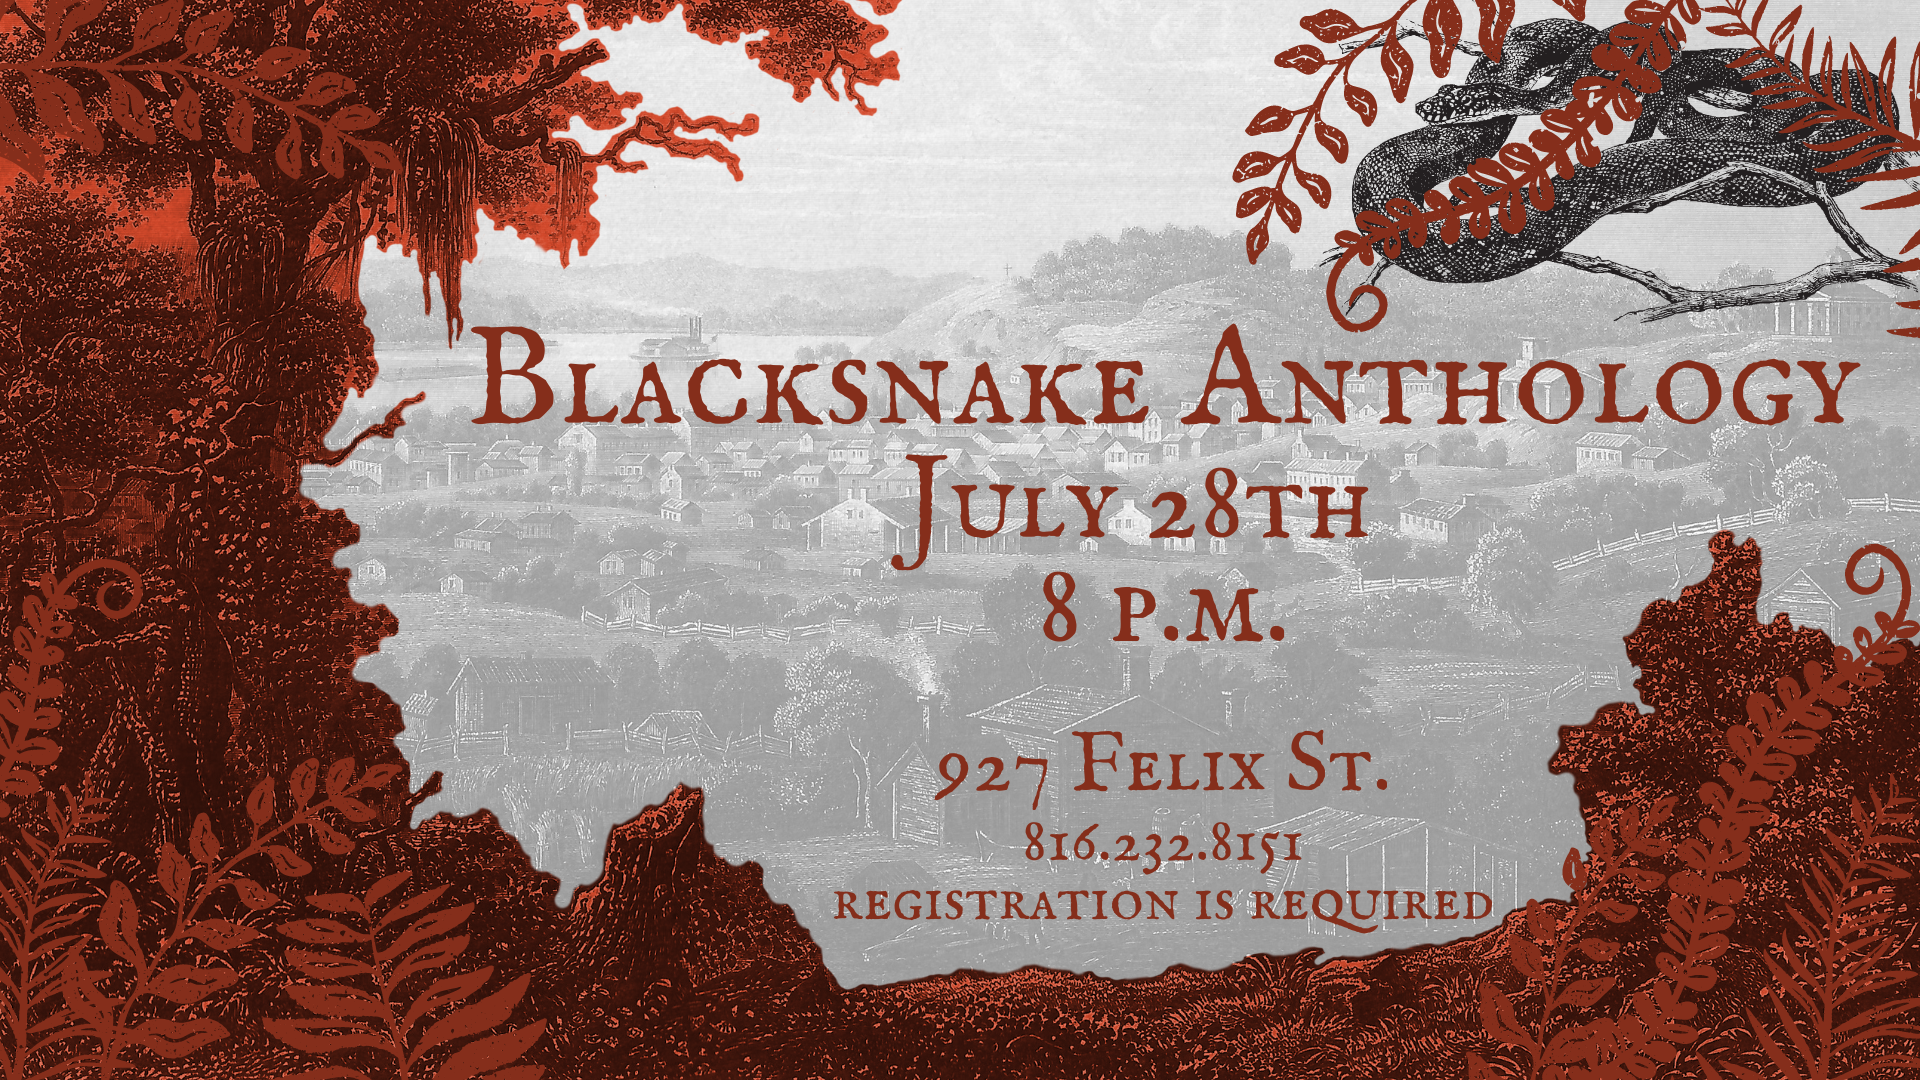 Blacksnake Anthology July 28 8pm 816.232.8151 Registration is required